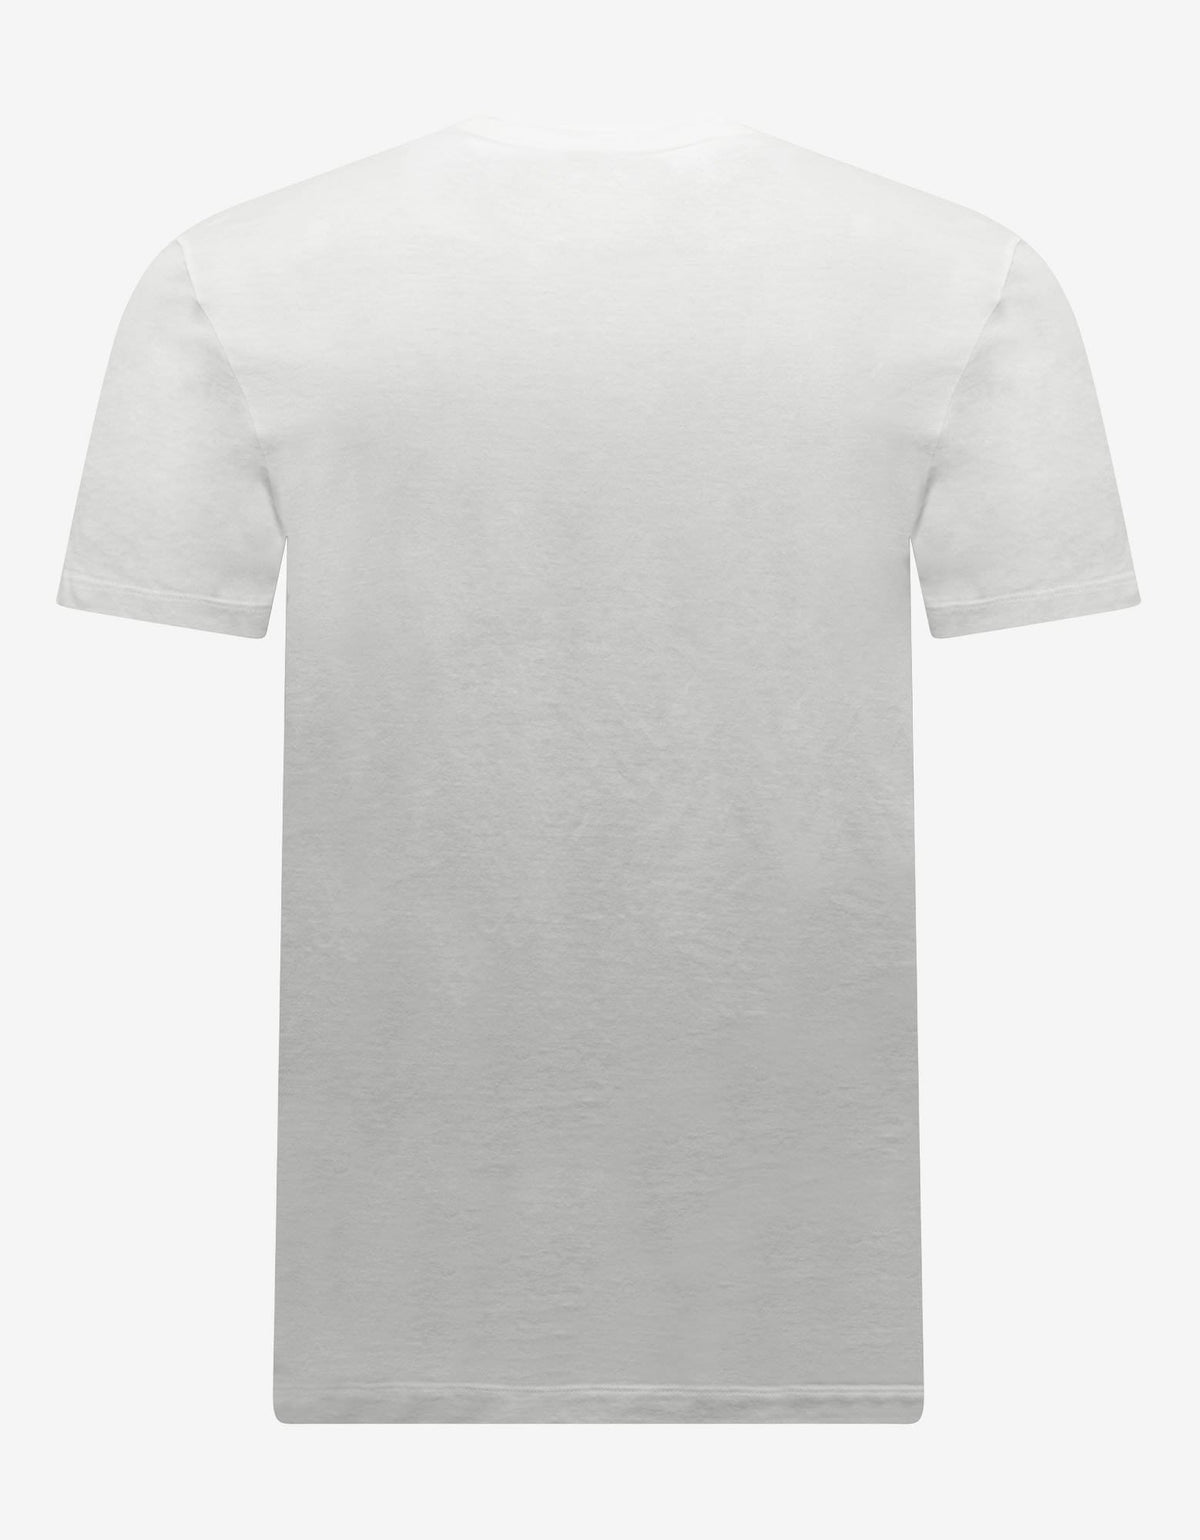 Versace White Perfume Bottle Print T-Shirt